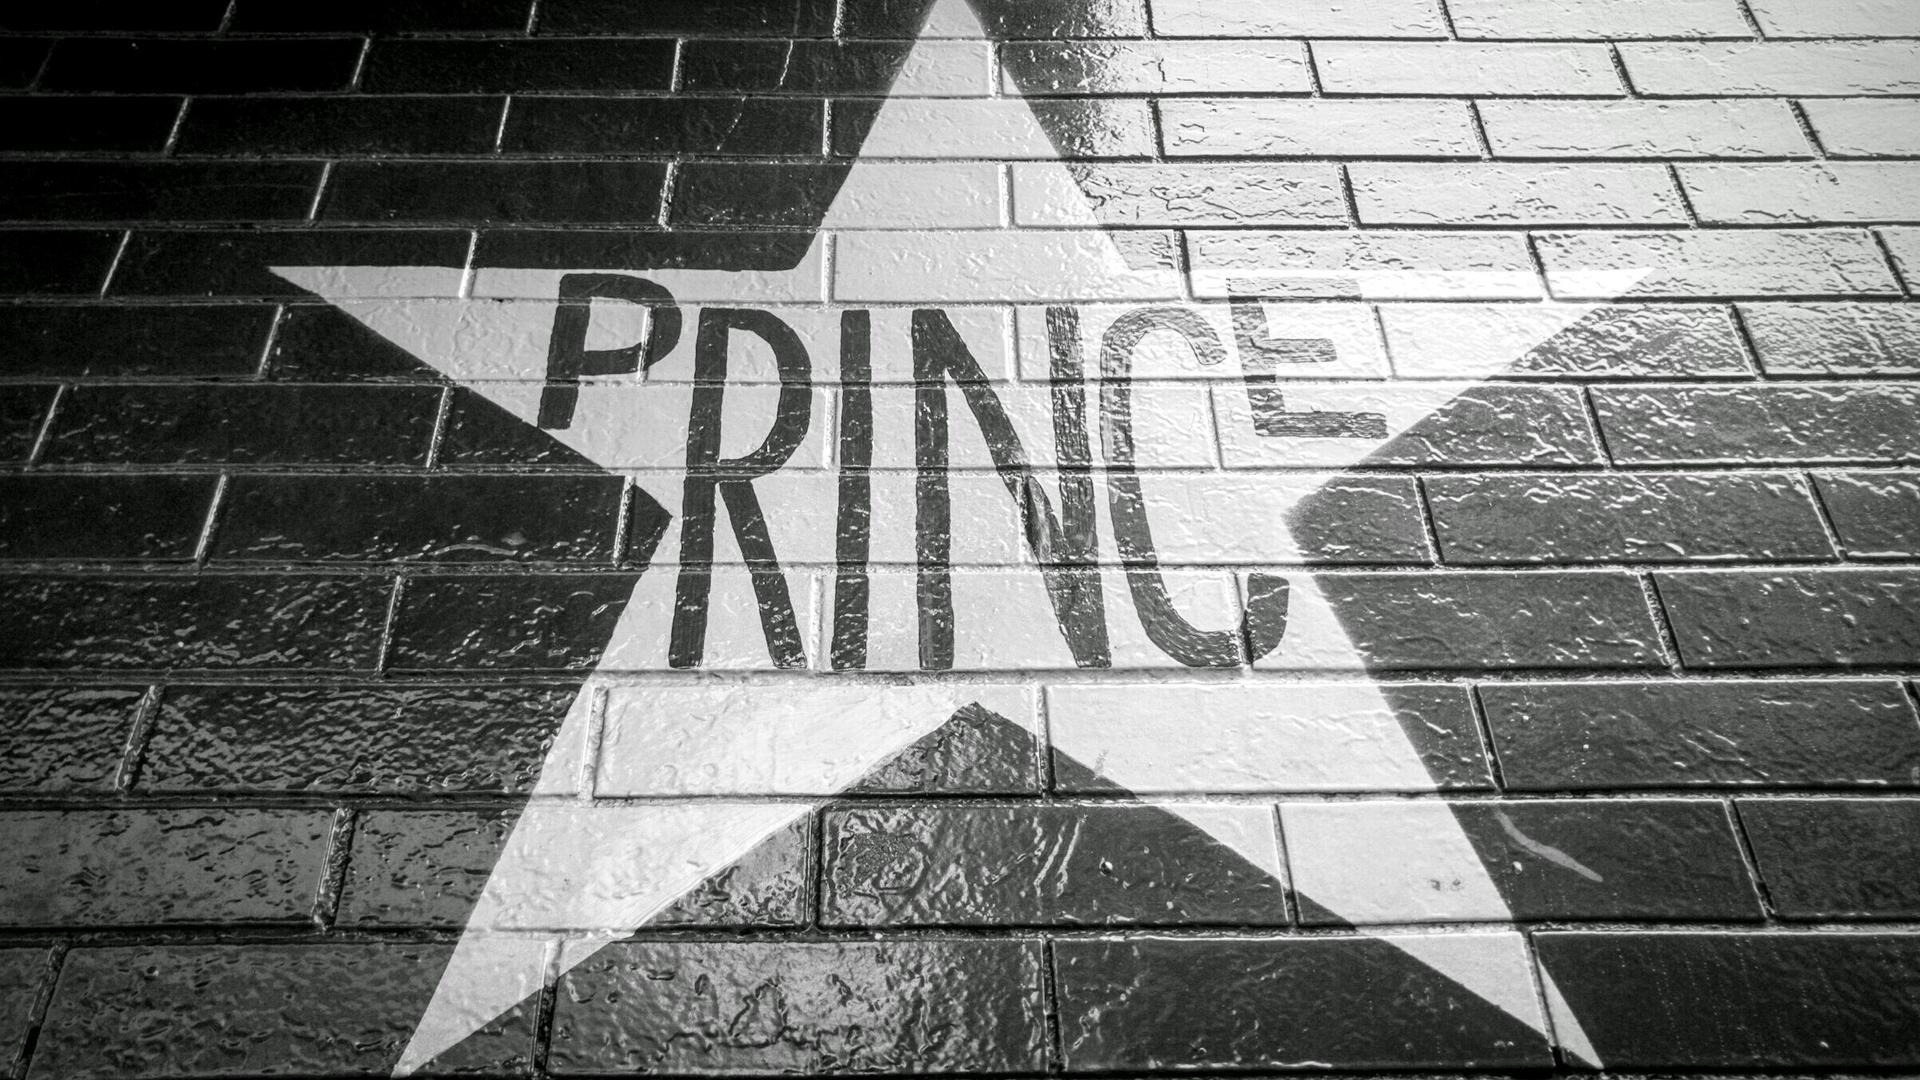 Prince star